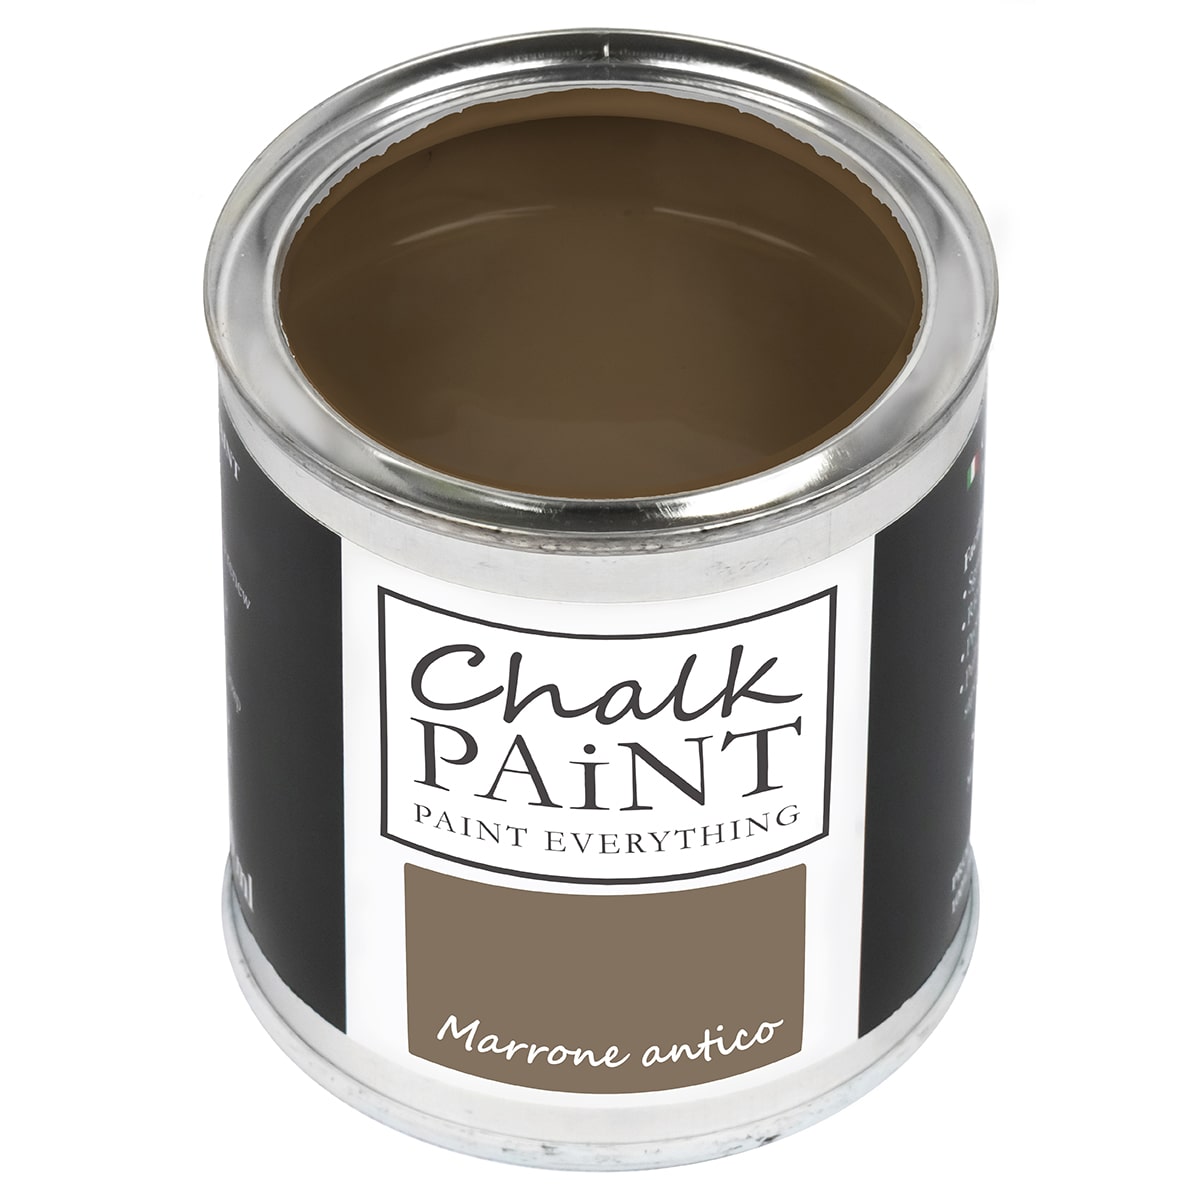 Chalk Paint Marrone antico